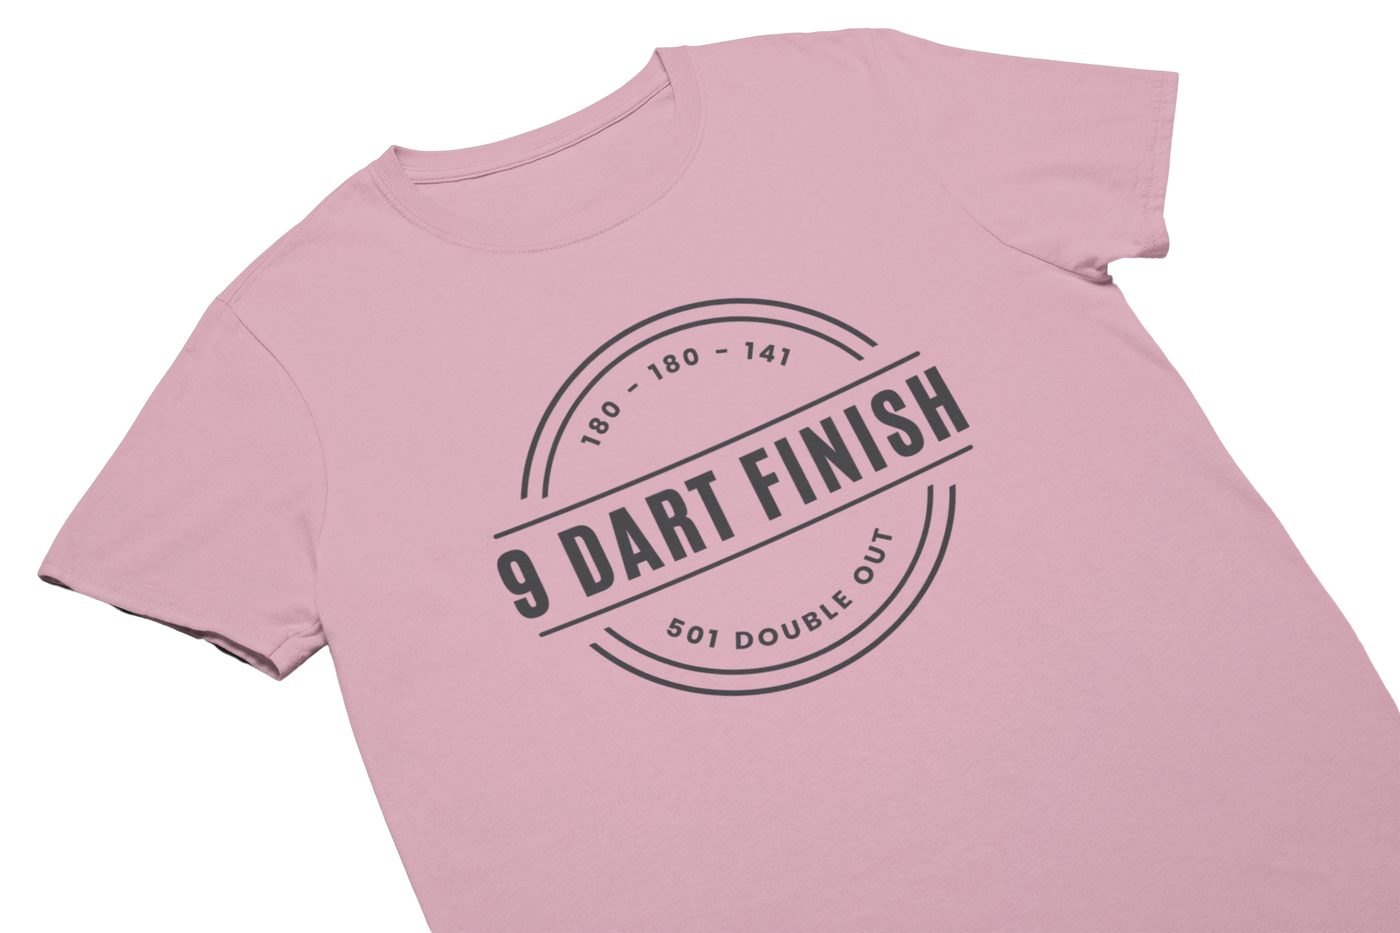 9 DART FINISH (Schwarzes Logo) - T-Shirt Pink